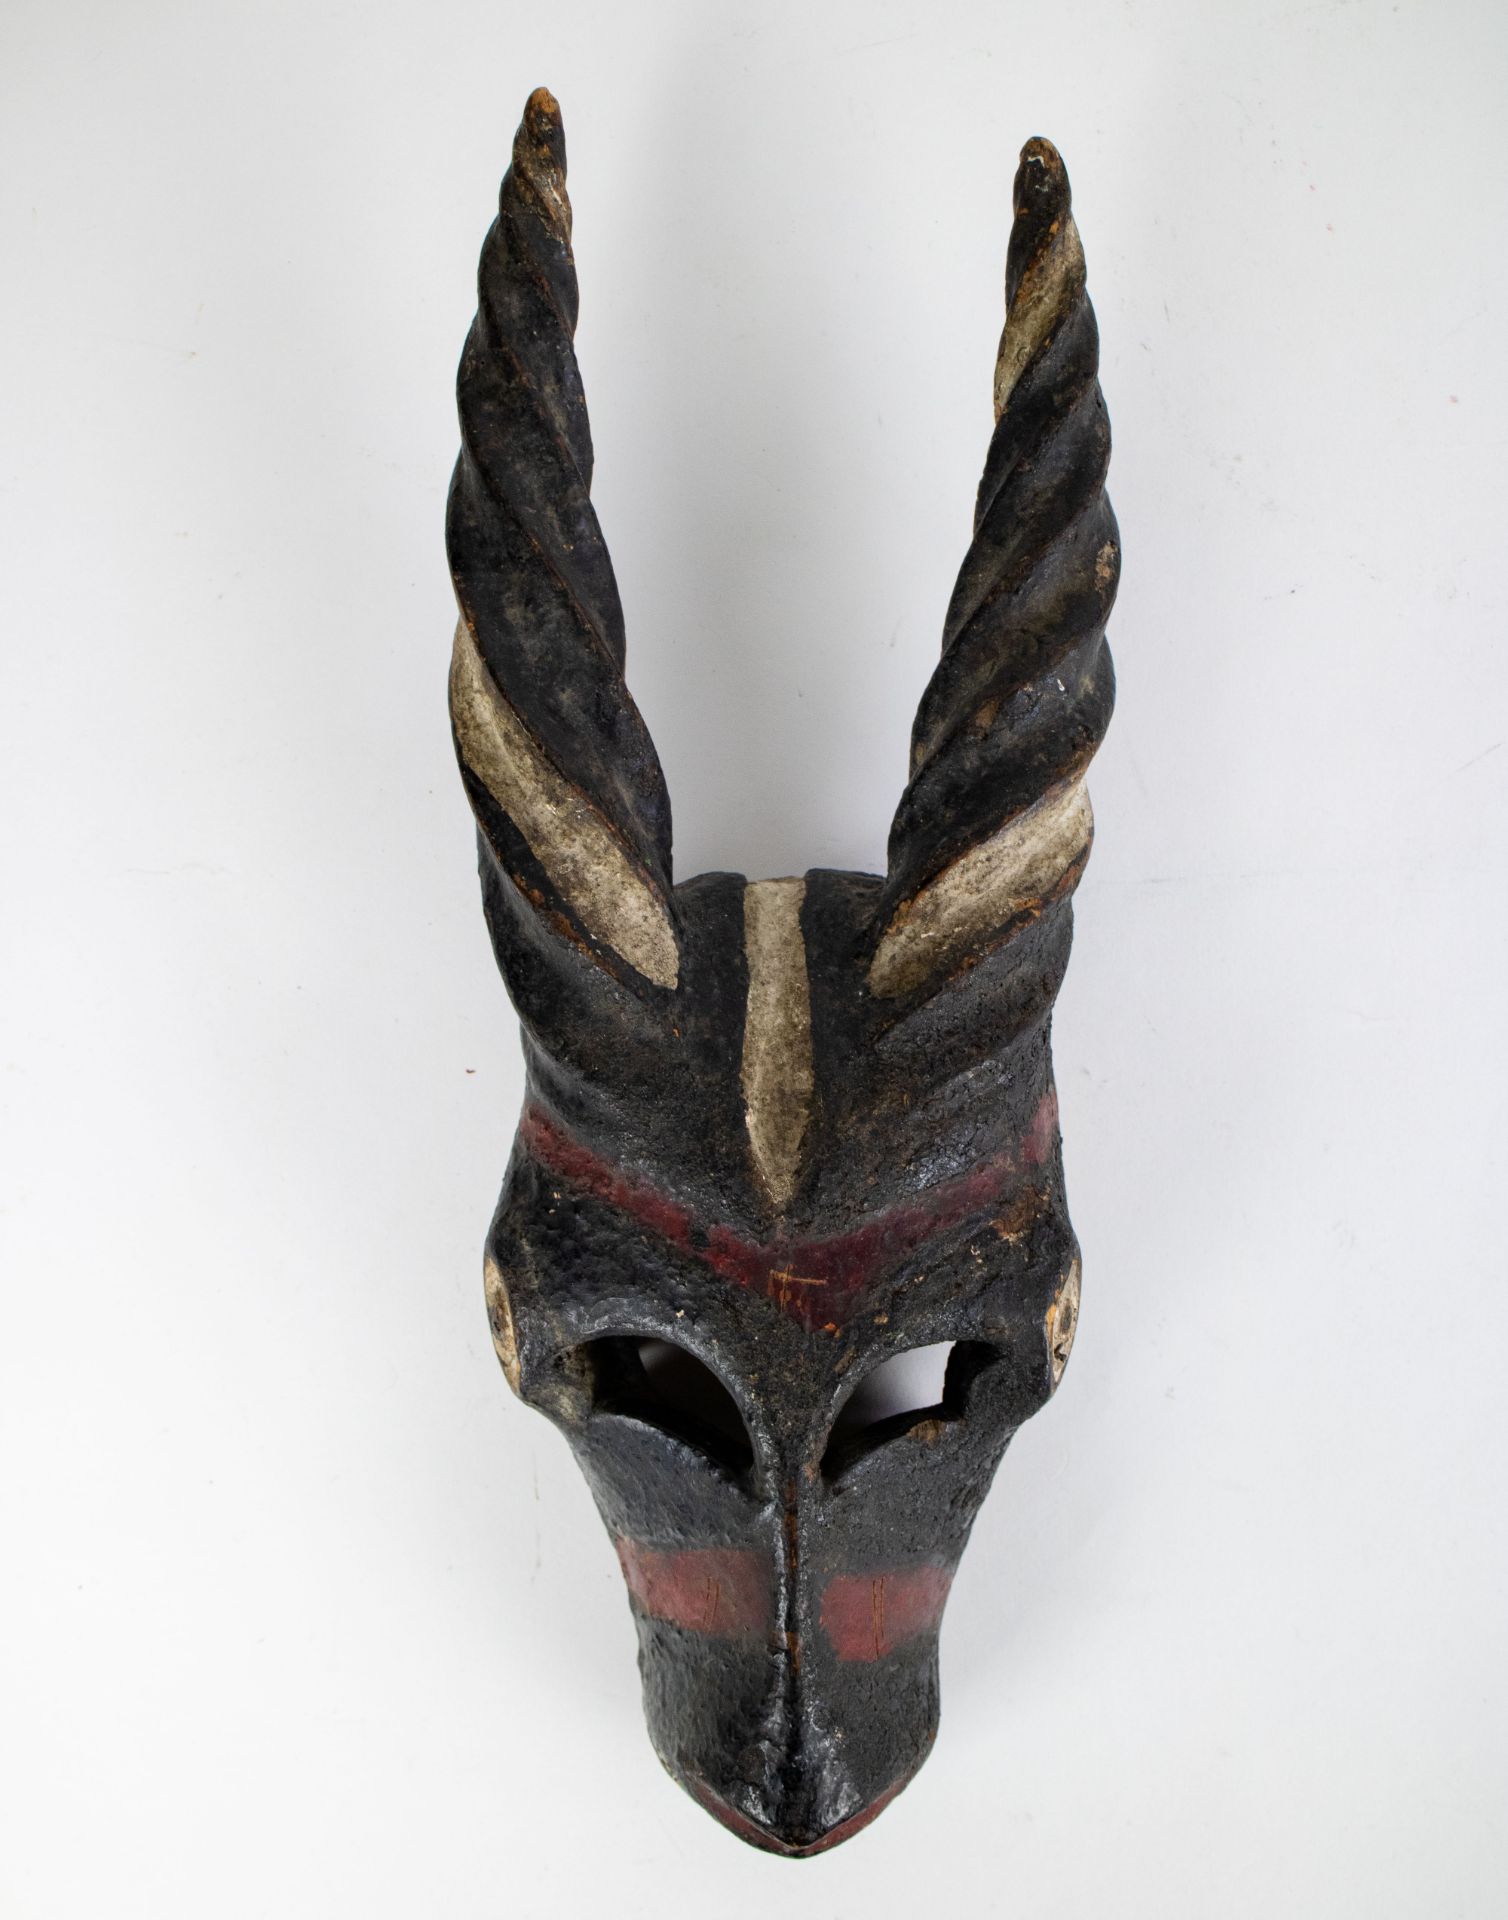 Ibibio mask (Nigeria)